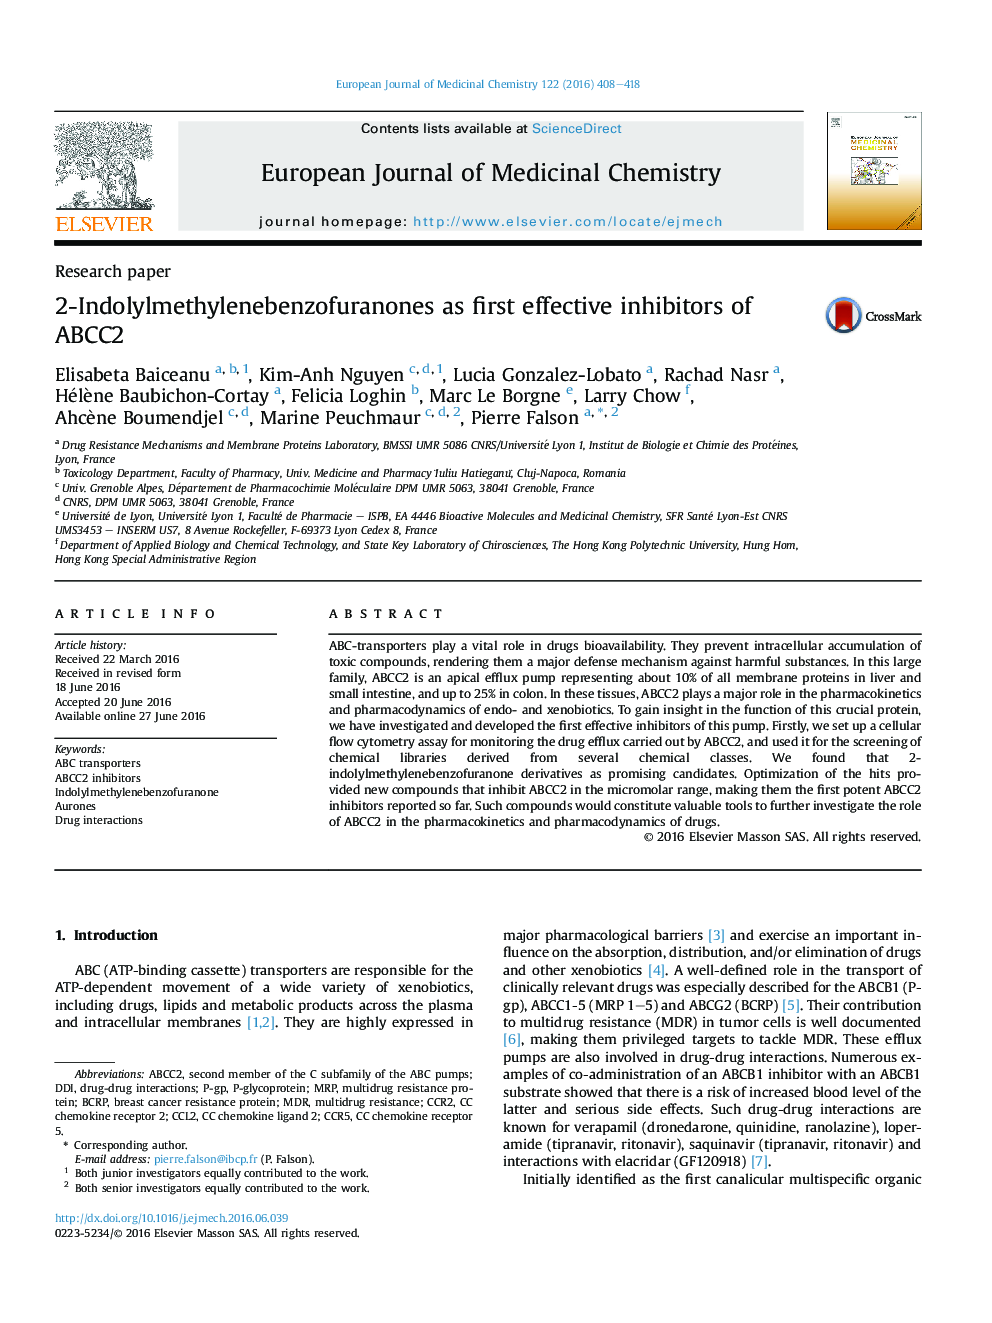 2-Indolylmethylenebenzofuranones as first effective inhibitors of ABCC2